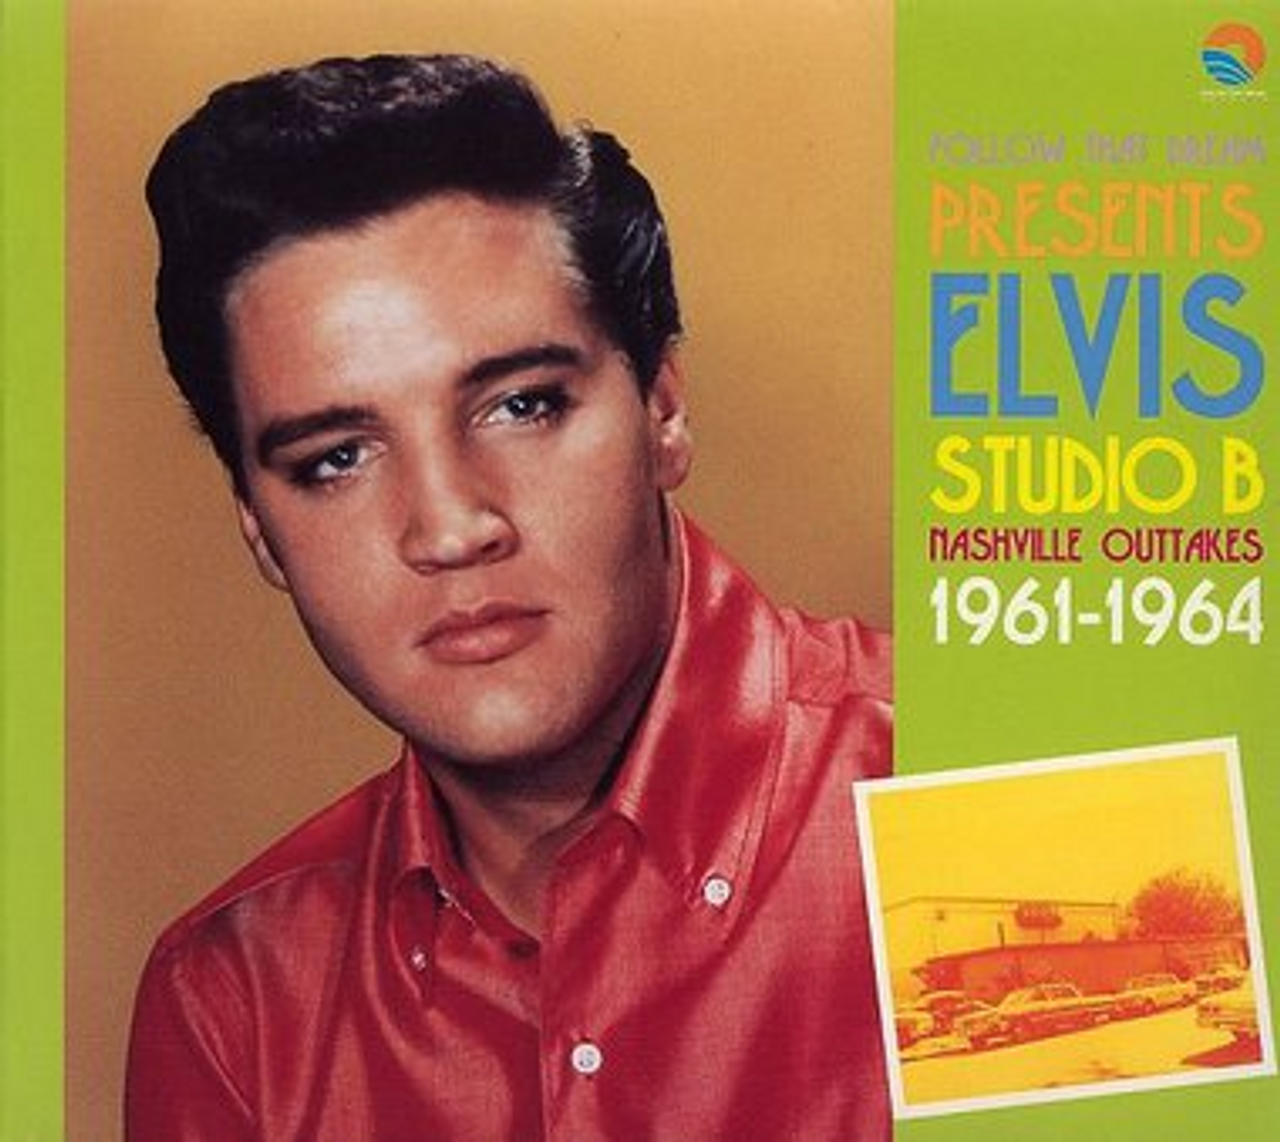 Studio B Elvis Presley Studio outtakes FTD CD - No Reply @  ElvisPresleyShop.com